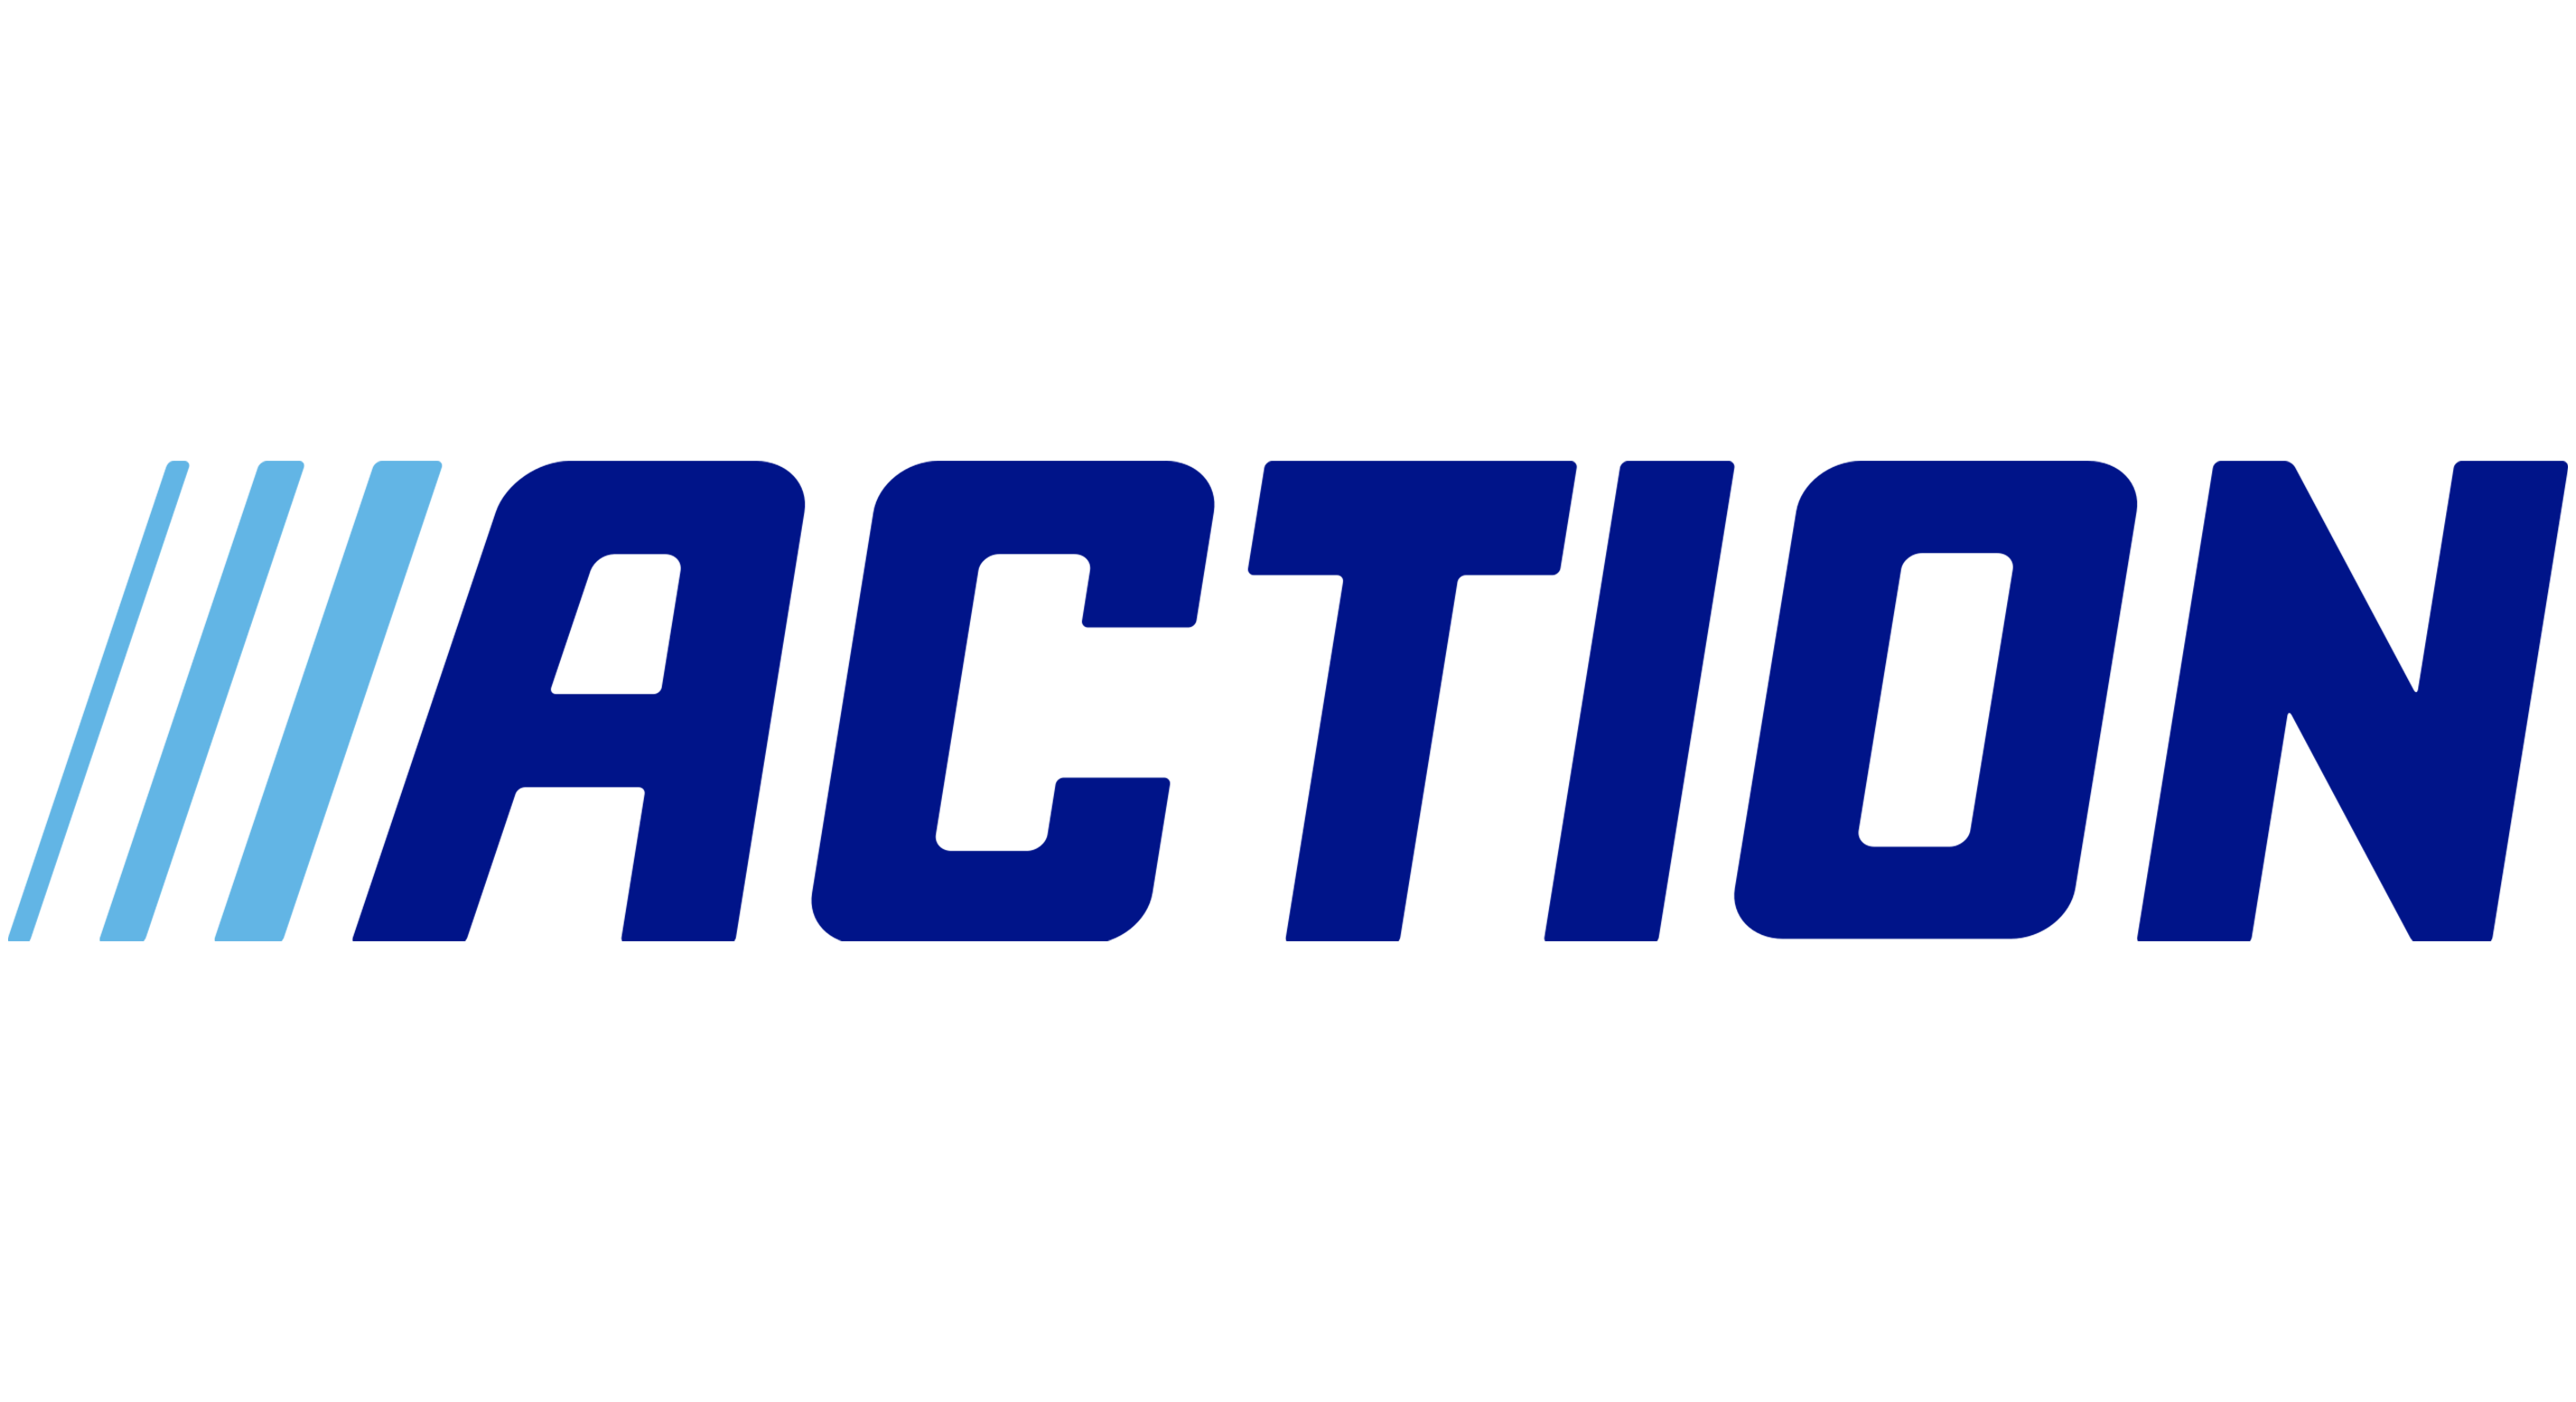 ACTION logo